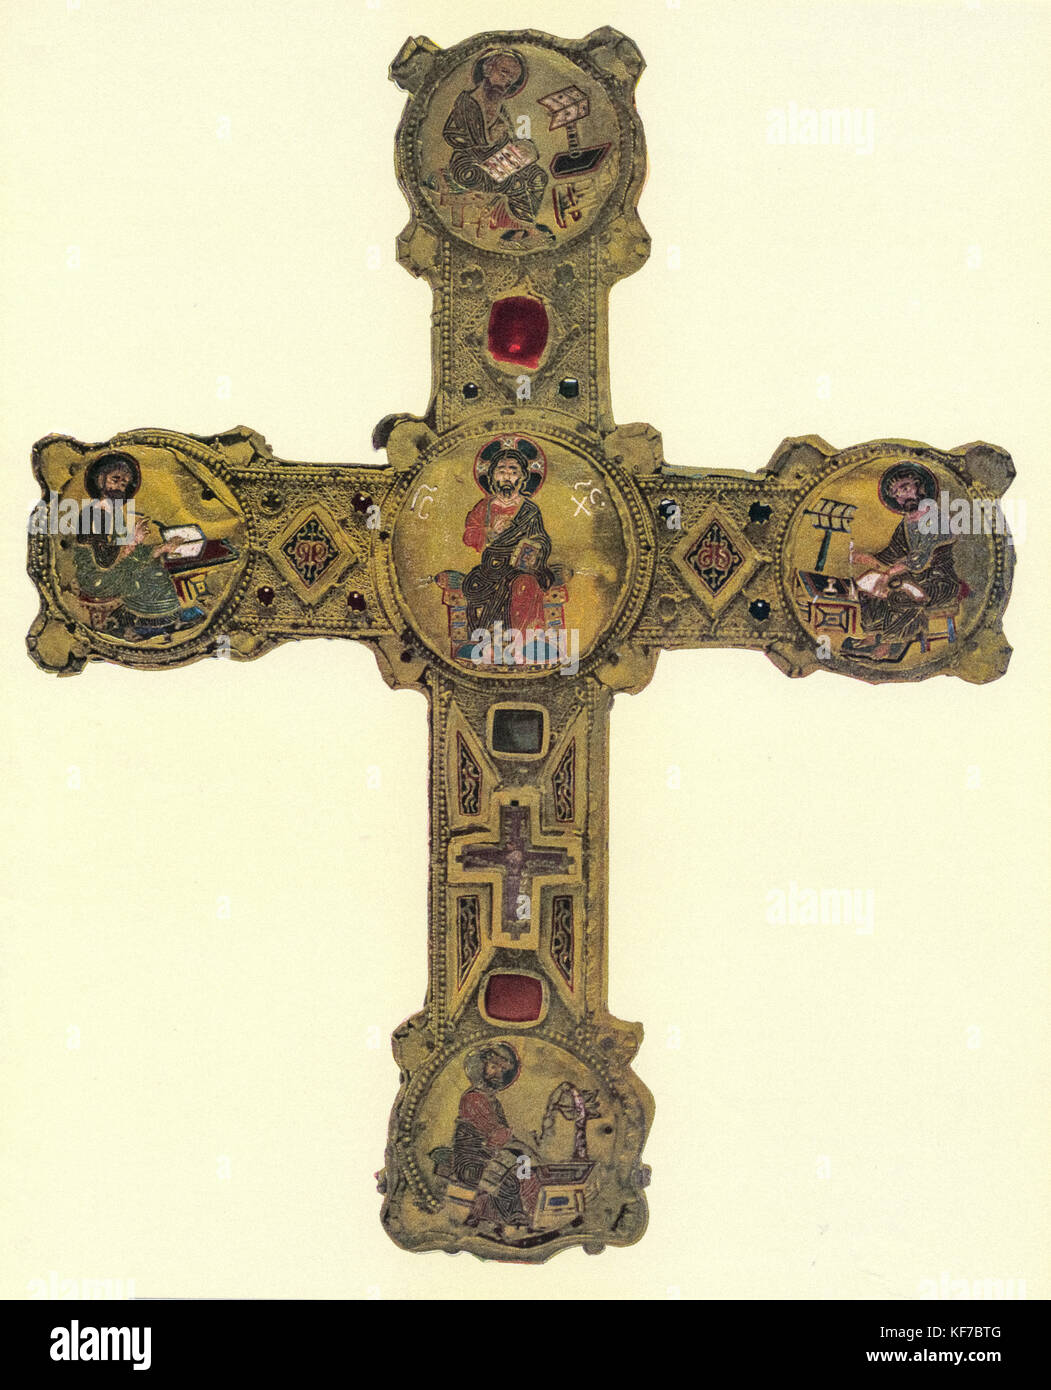 Italy Calabria Cosenza - Cross relic - enamel paint - XII century Stock Photo